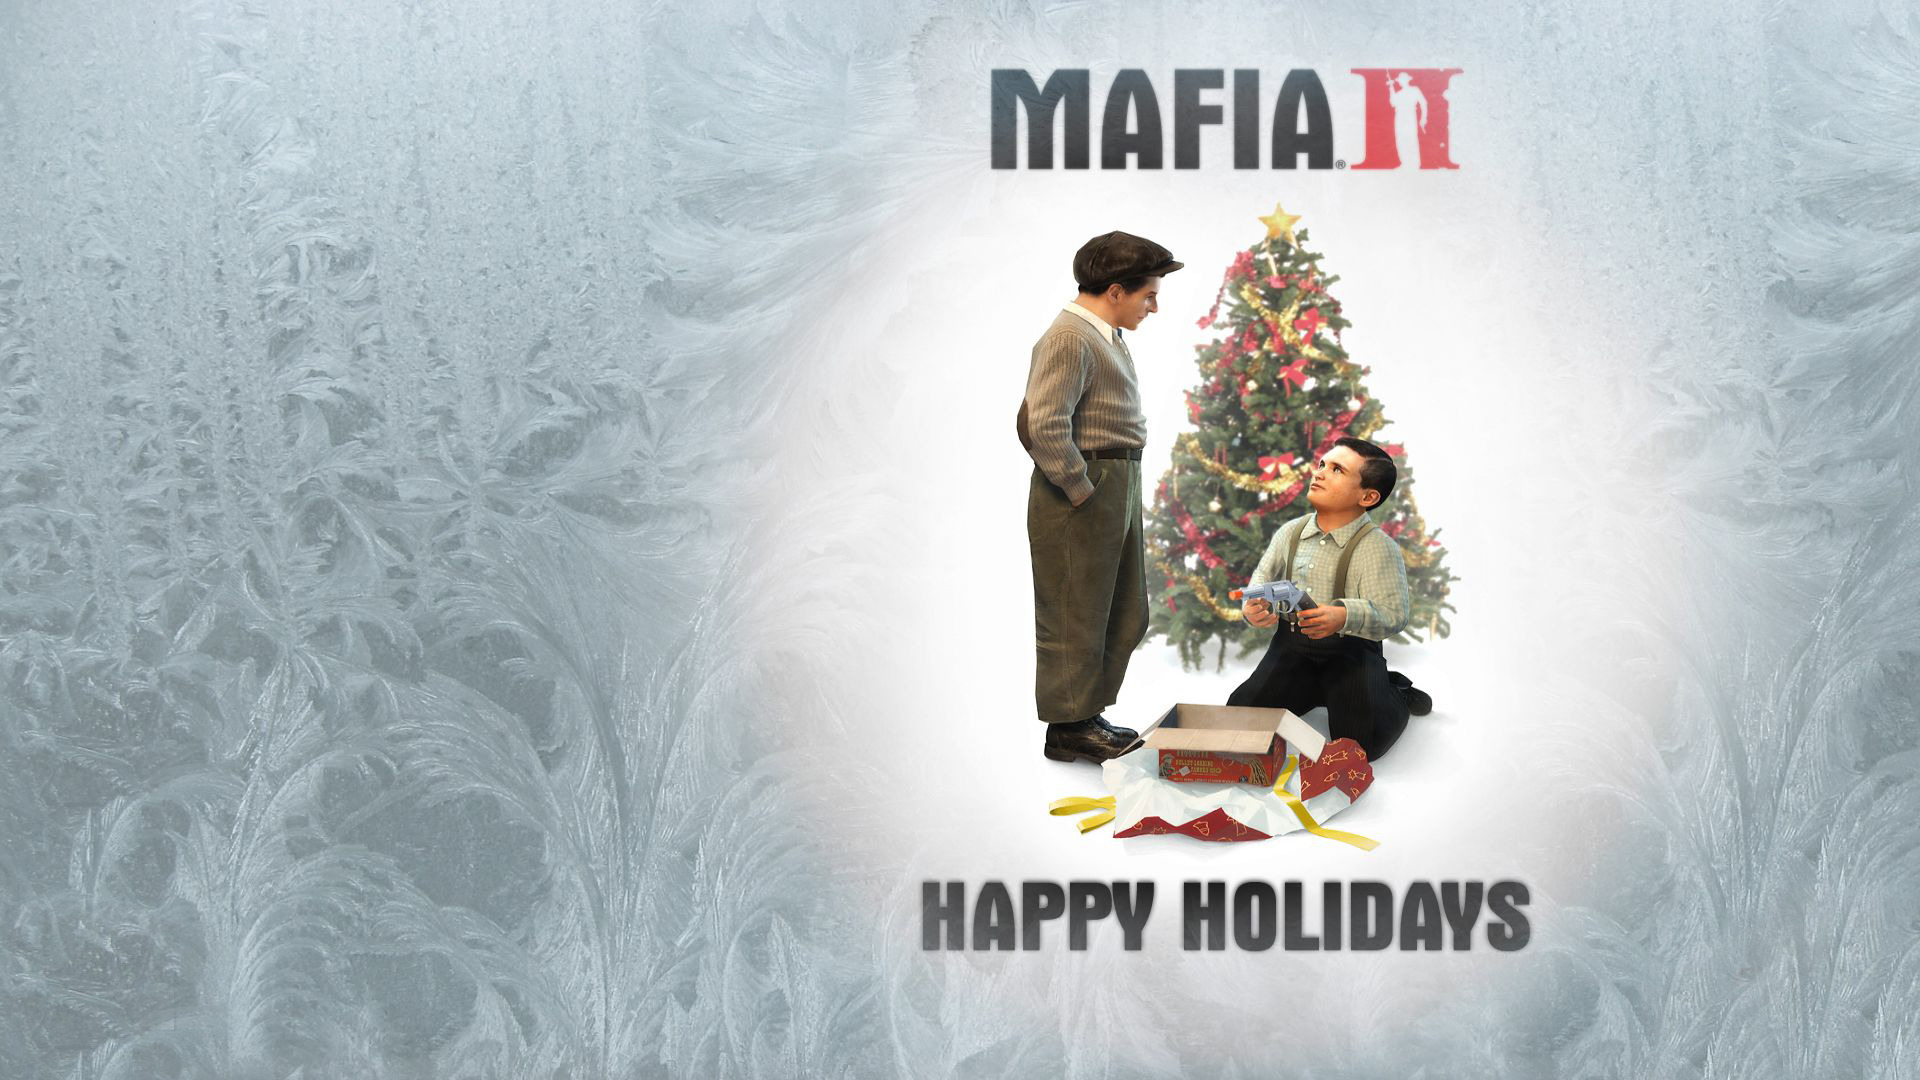 Mafia II Widescreen Wallpaper   3212